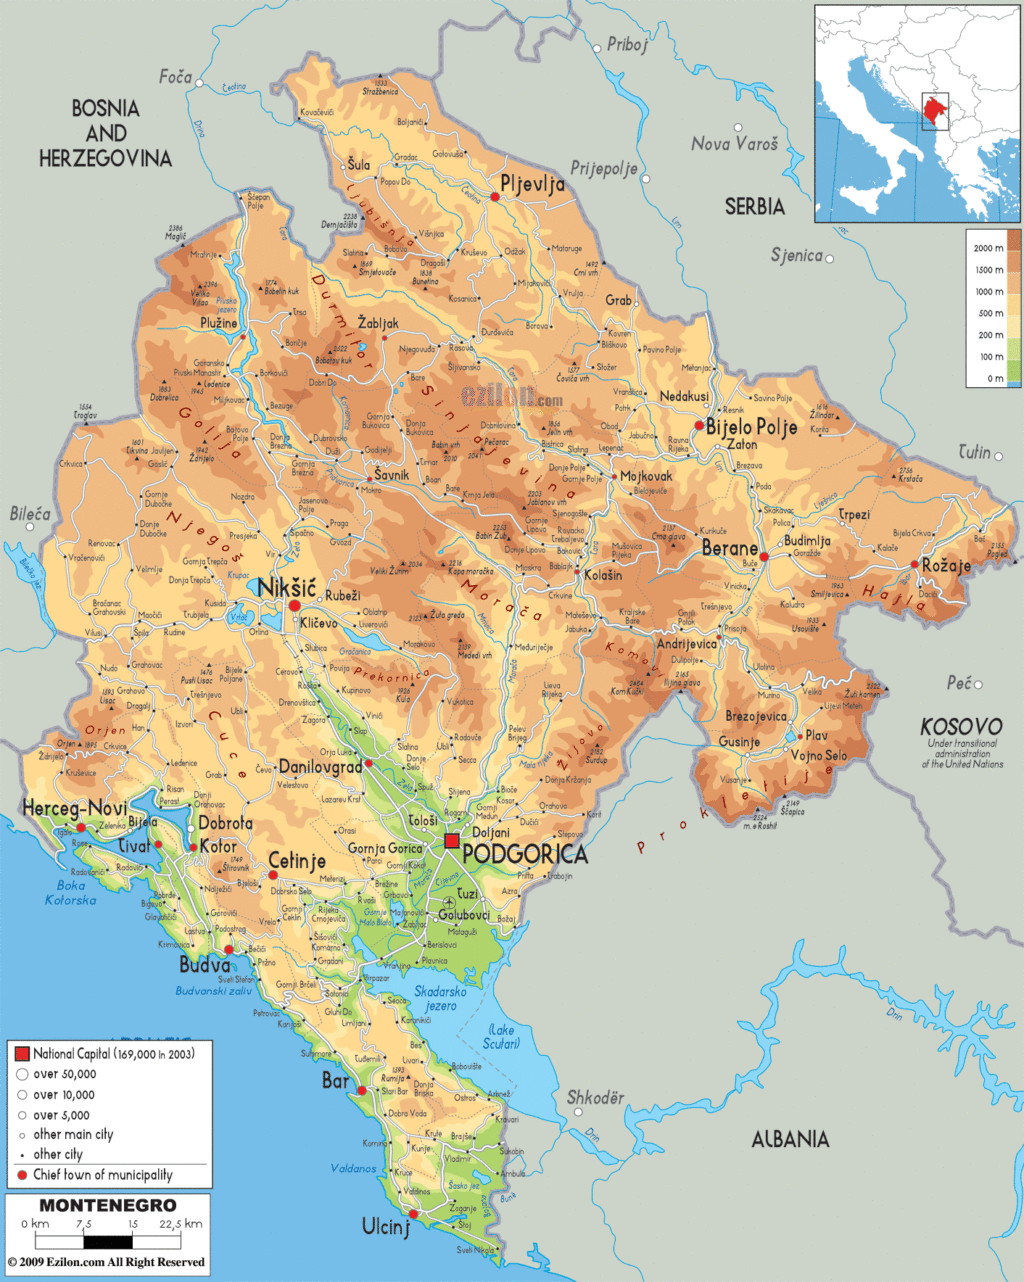 Bản đồ vật lý Montenegro